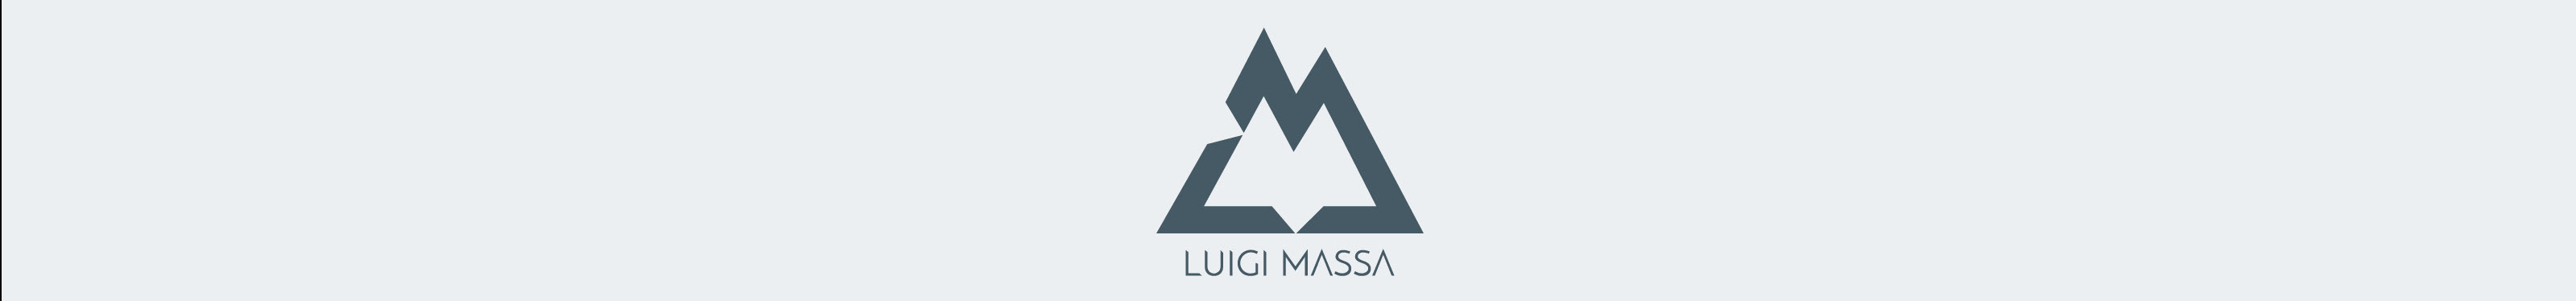 Luigi Massa's profile banner